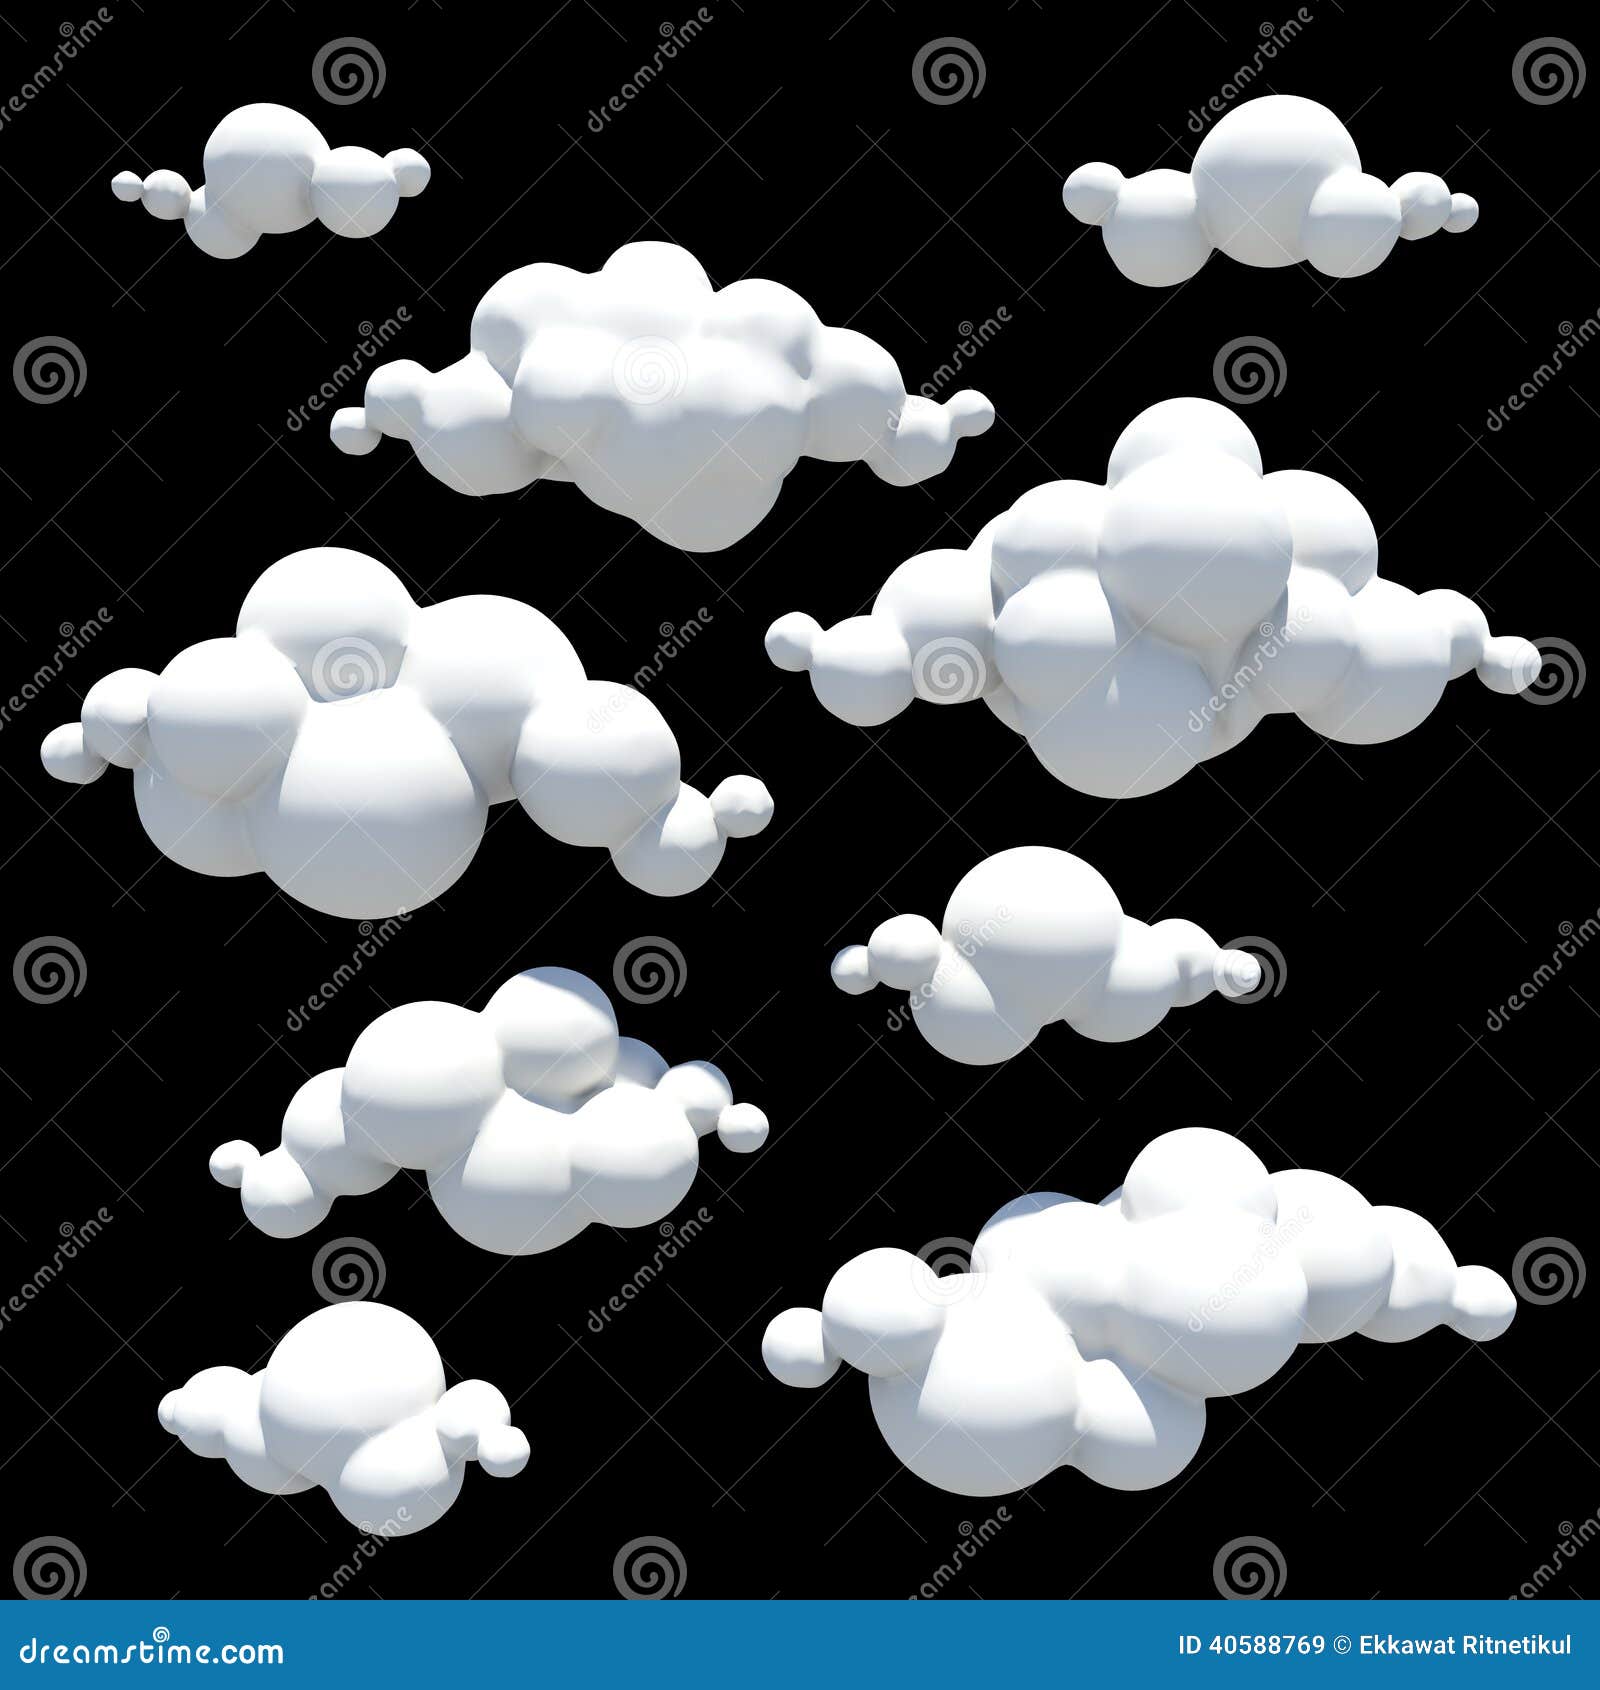 Cartoon Clouds, Design Element, PNG Transparent Ba Stock Image -  Illustration of object, climate: 40588769